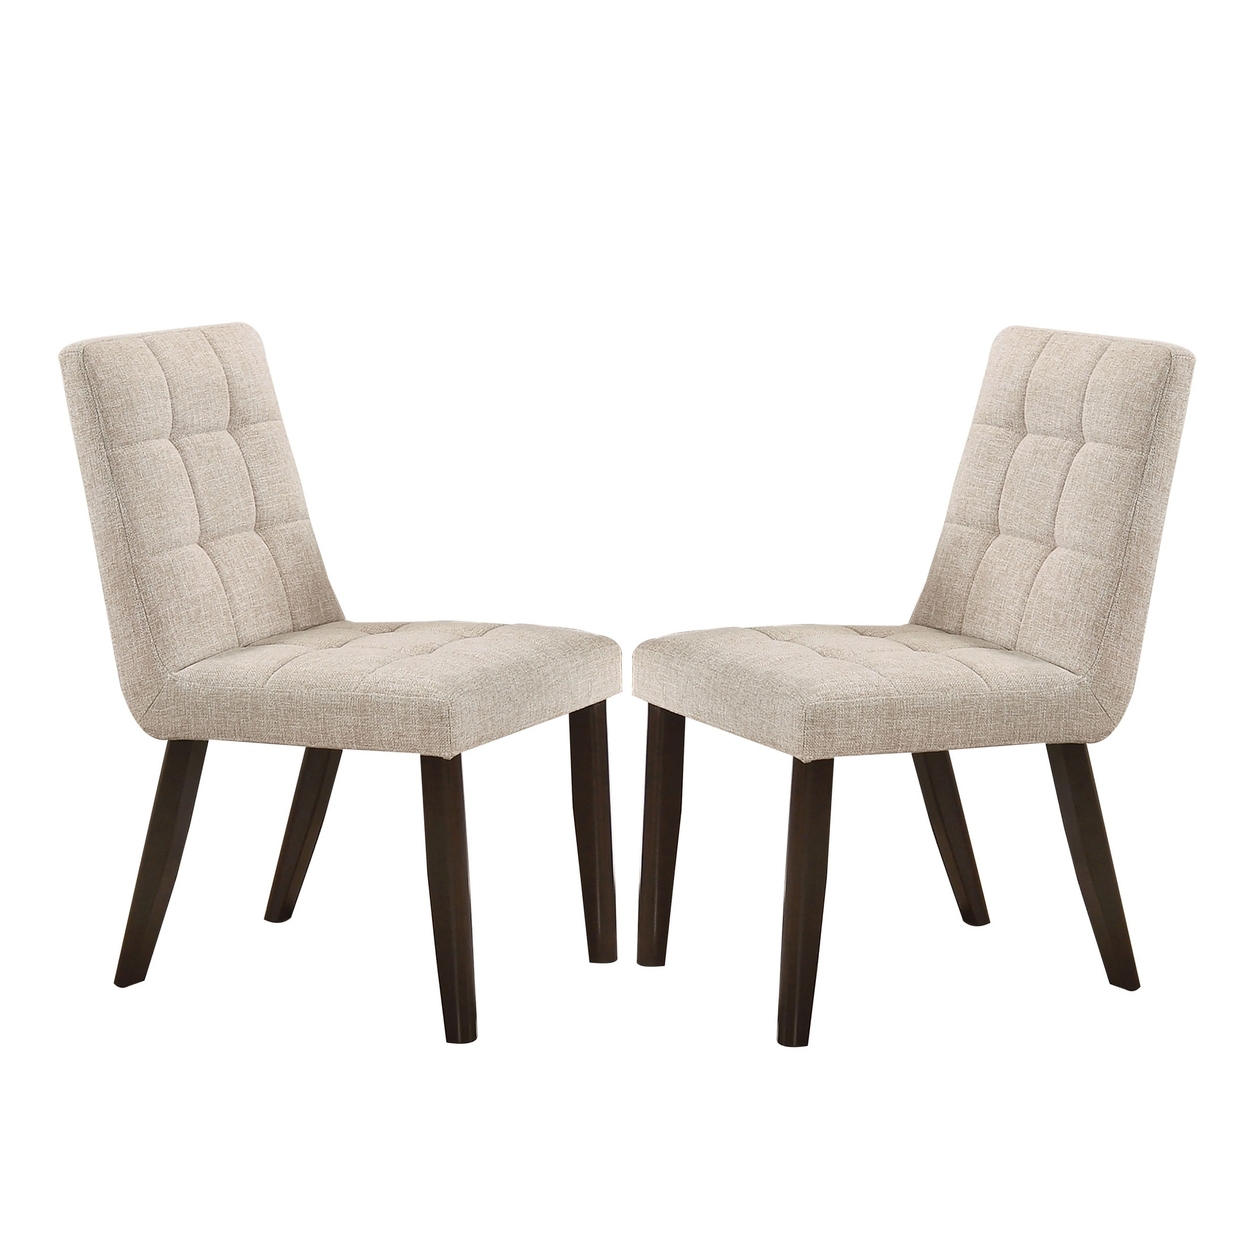 Sels 18 Inch Side Chair, Set Of 2, Beige Fabric, Grid Tufting, Brown Legs- Saltoro Sherpi